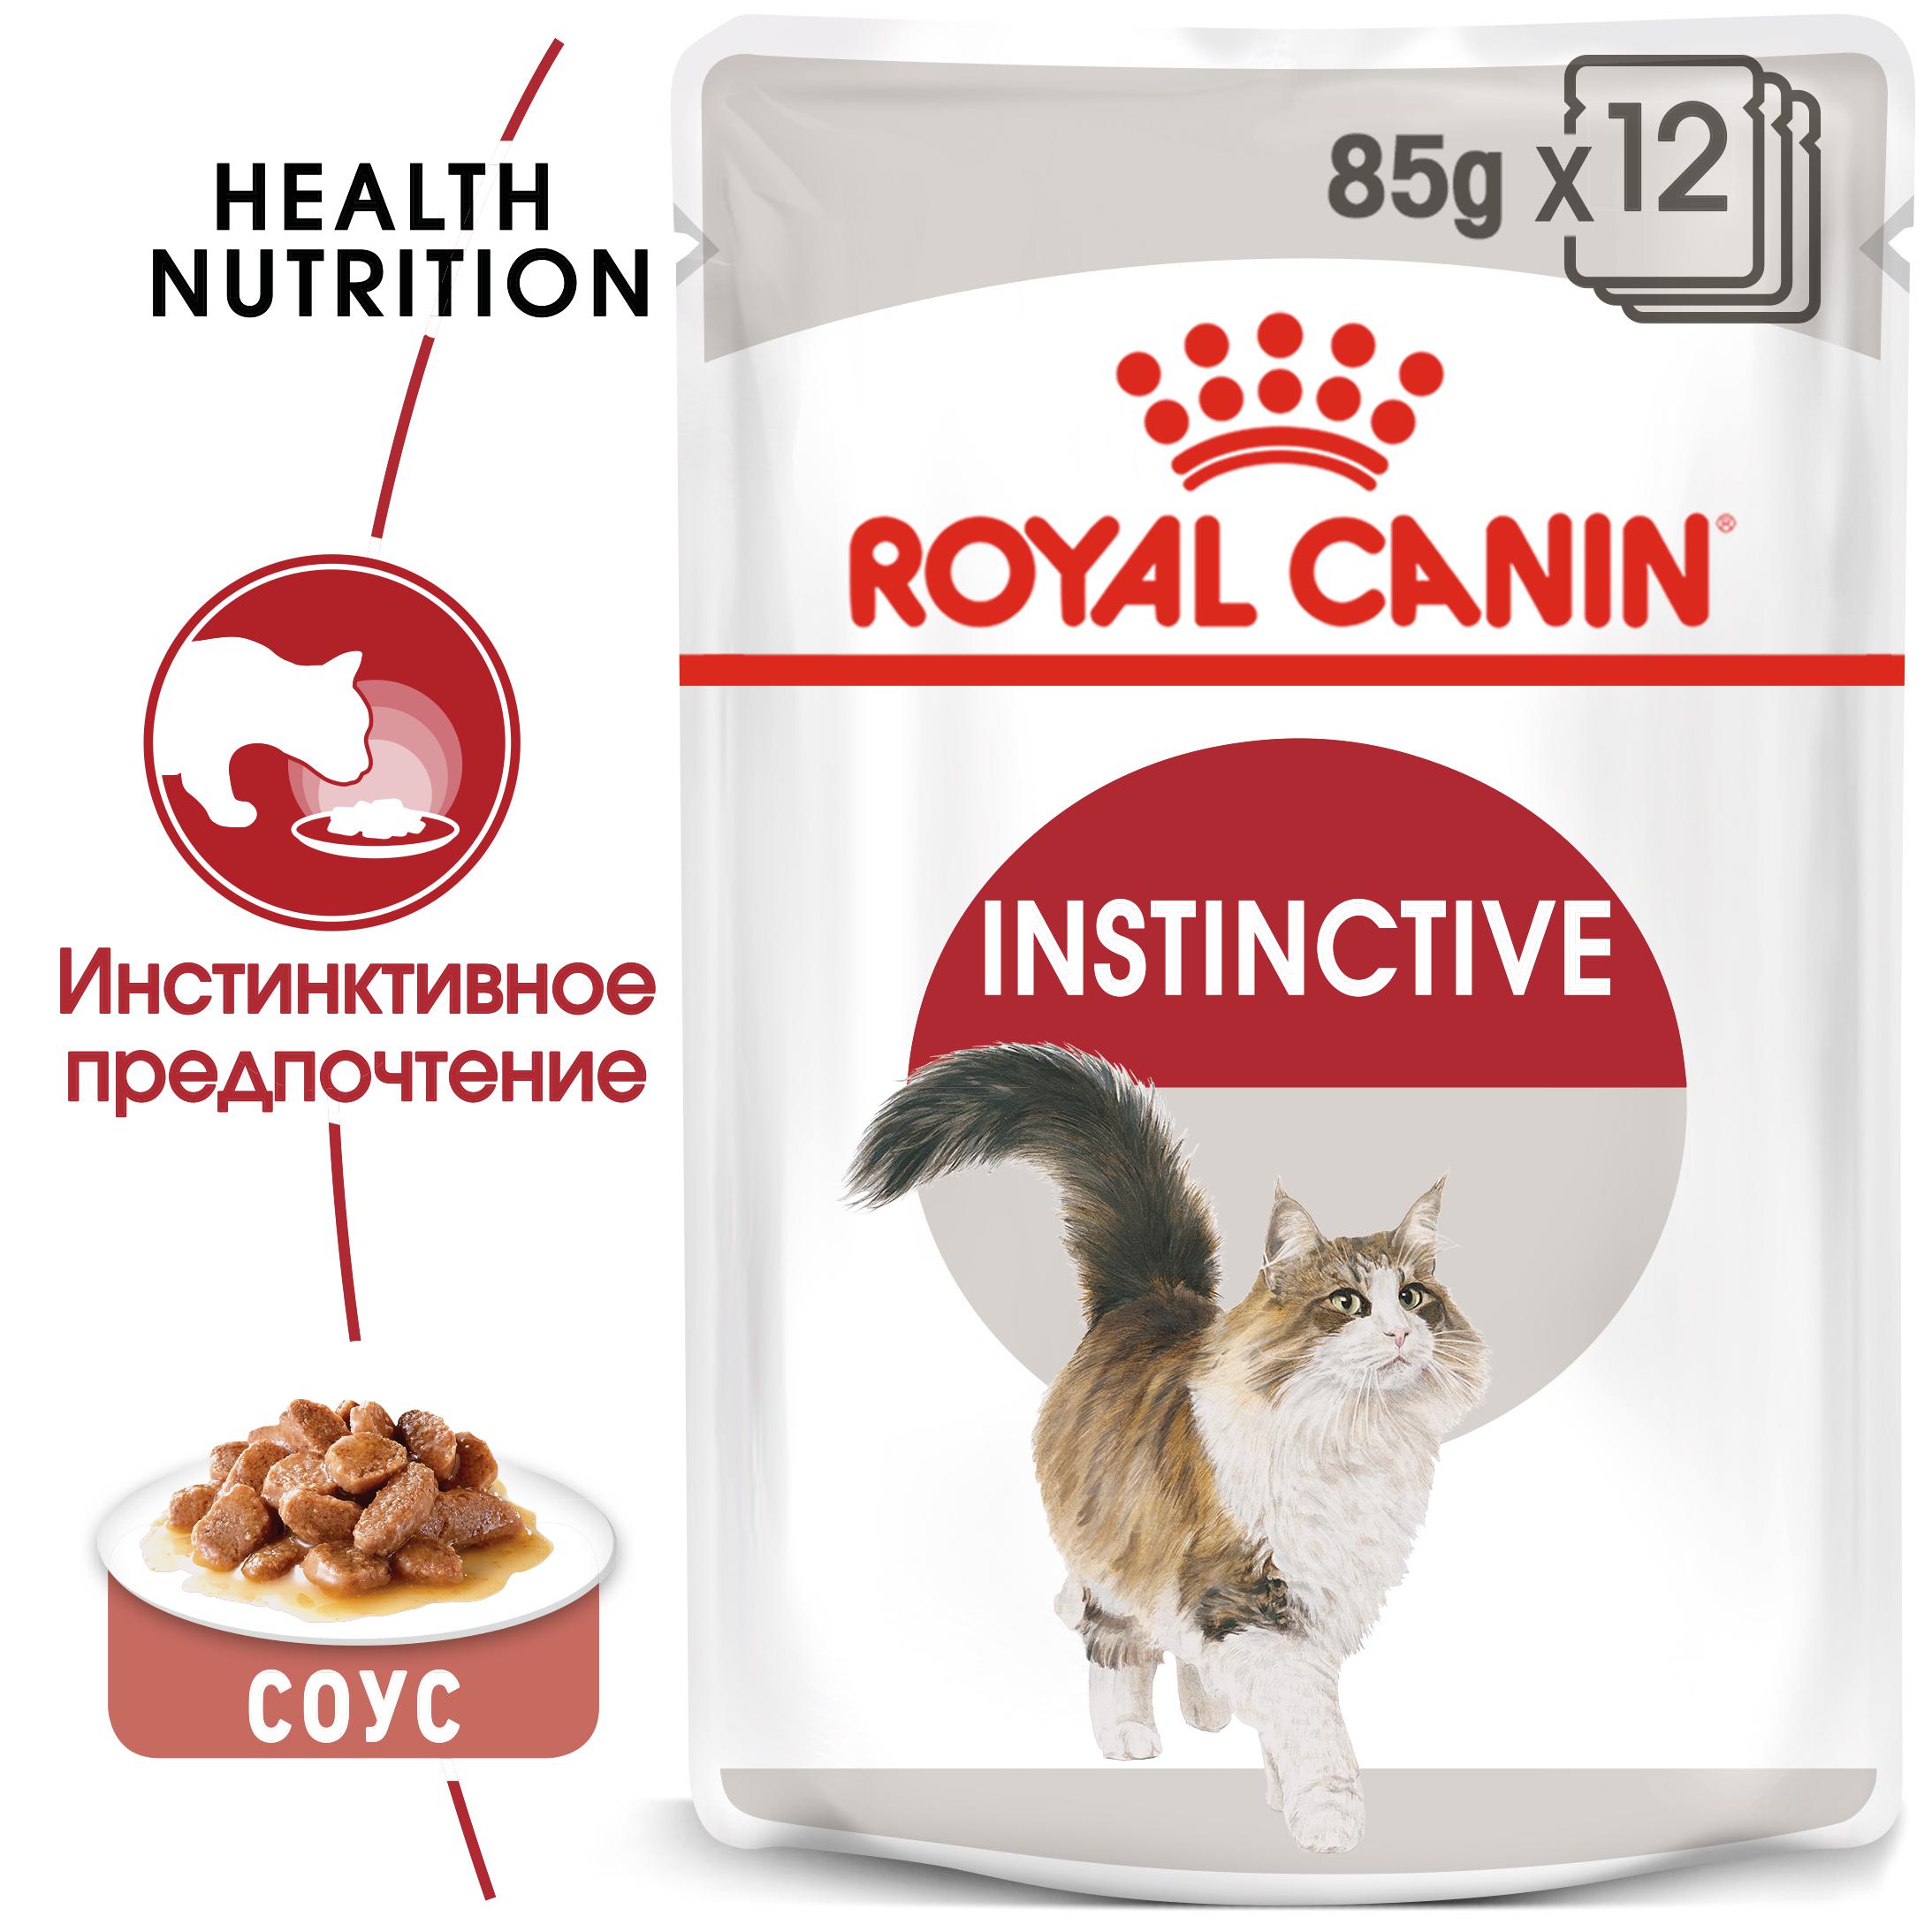 Royal canin sterilized